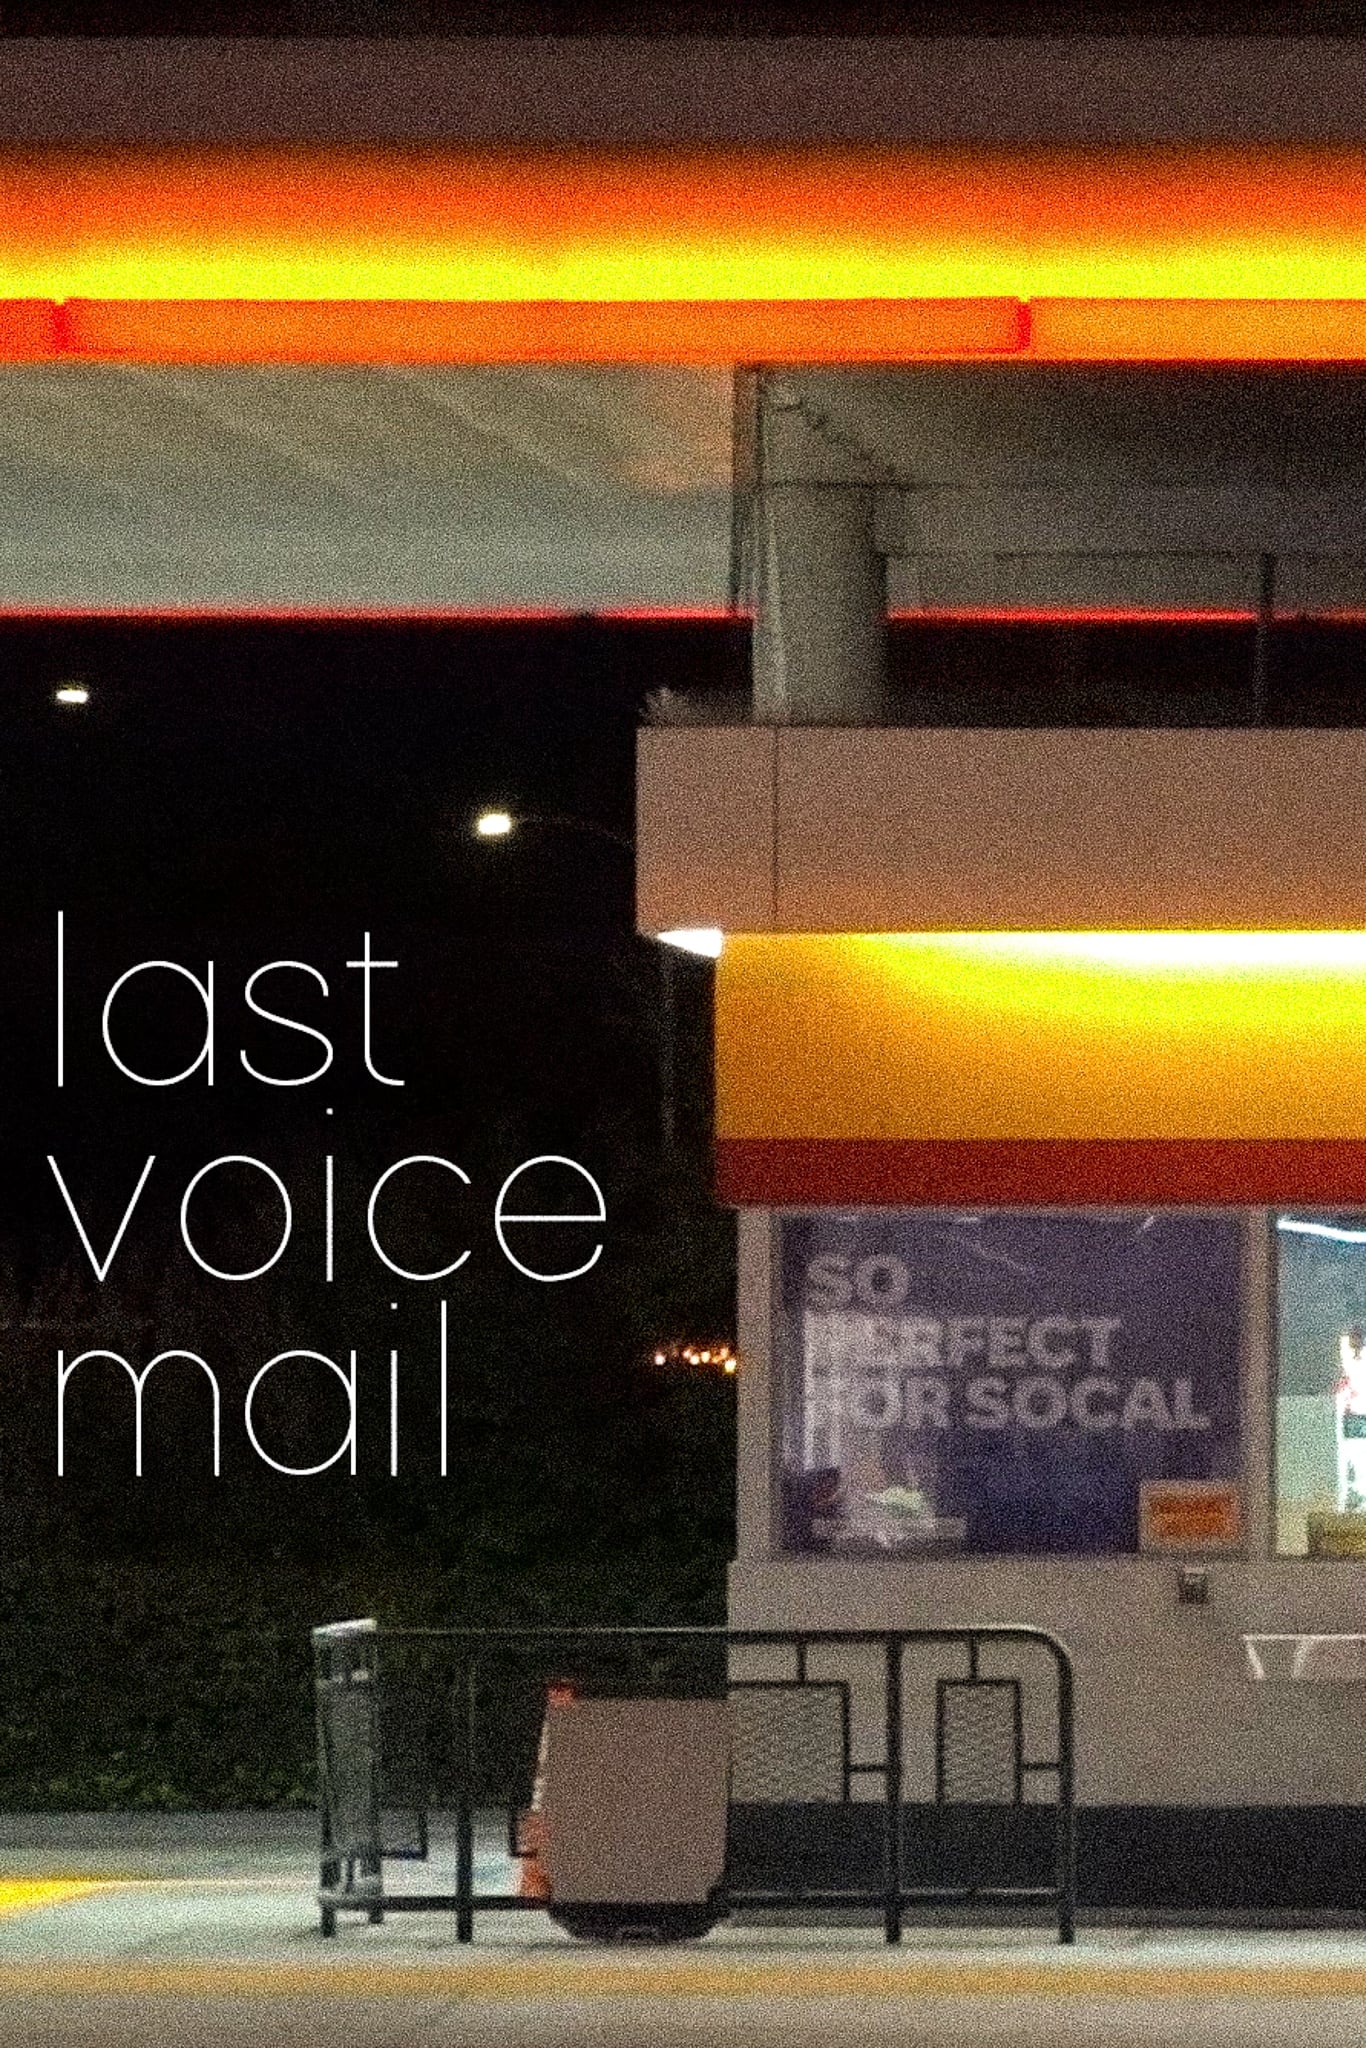 Last Voicemail